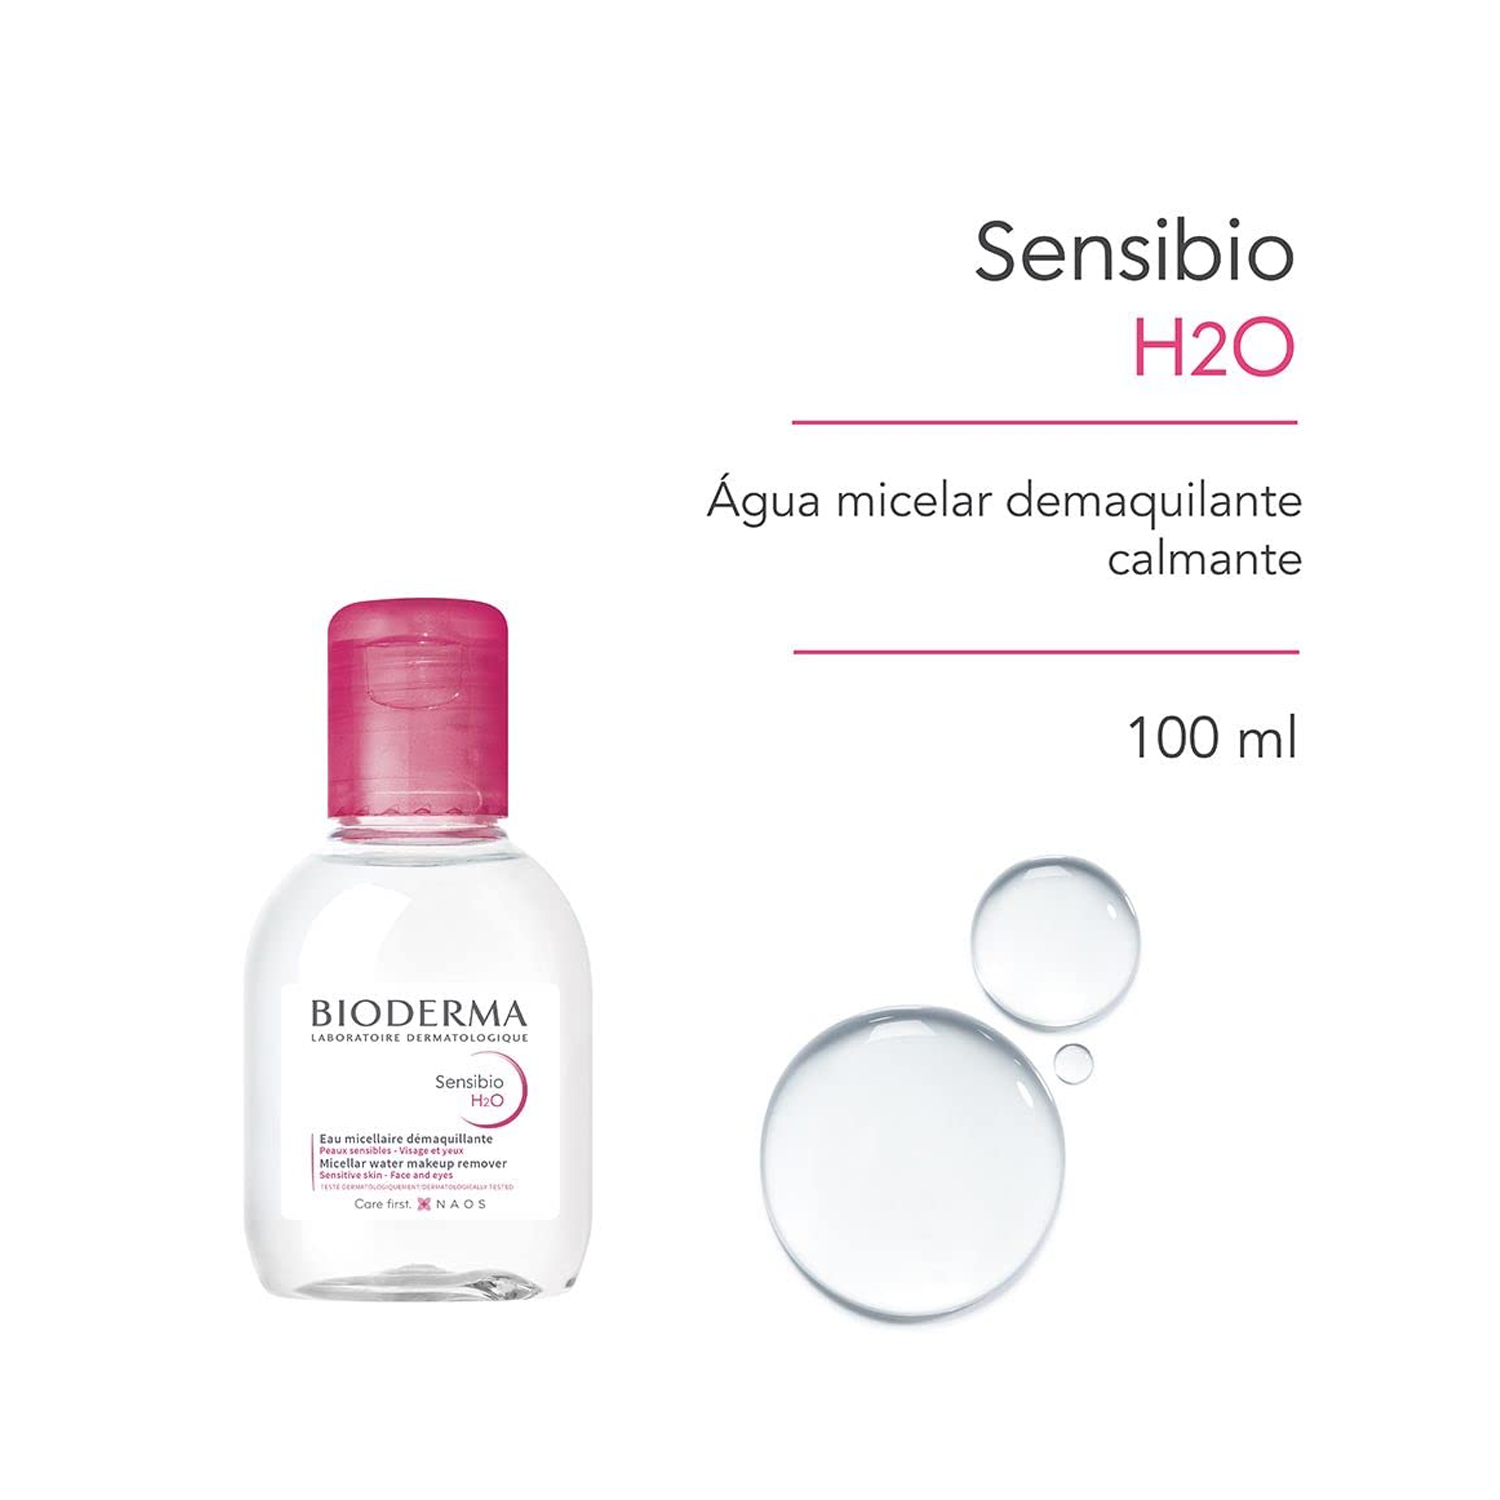 Bioderma Crealine H2O Micellar Solution -500ml – The French Cosmetics Club